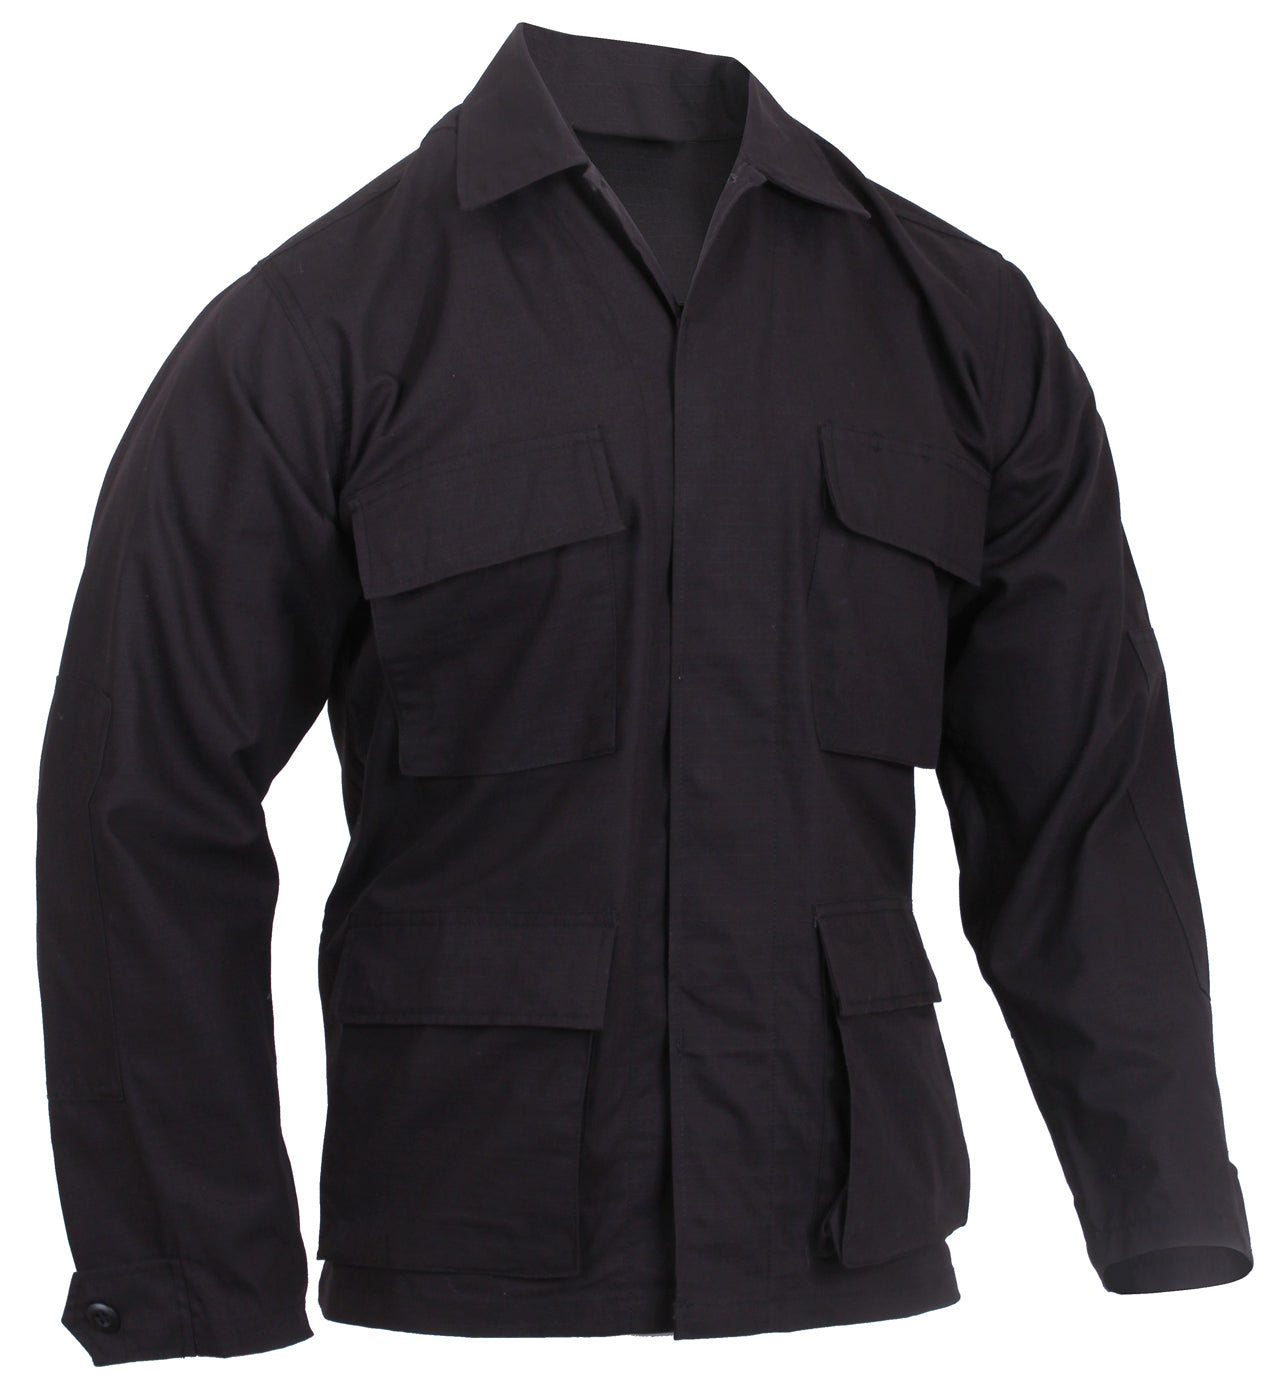 Milspec Rip-Stop BDU Shirt (100% Cotton Rip-Stop) Big & Tall Shirts MilTac Tactical Military Outdoor Gear Australia